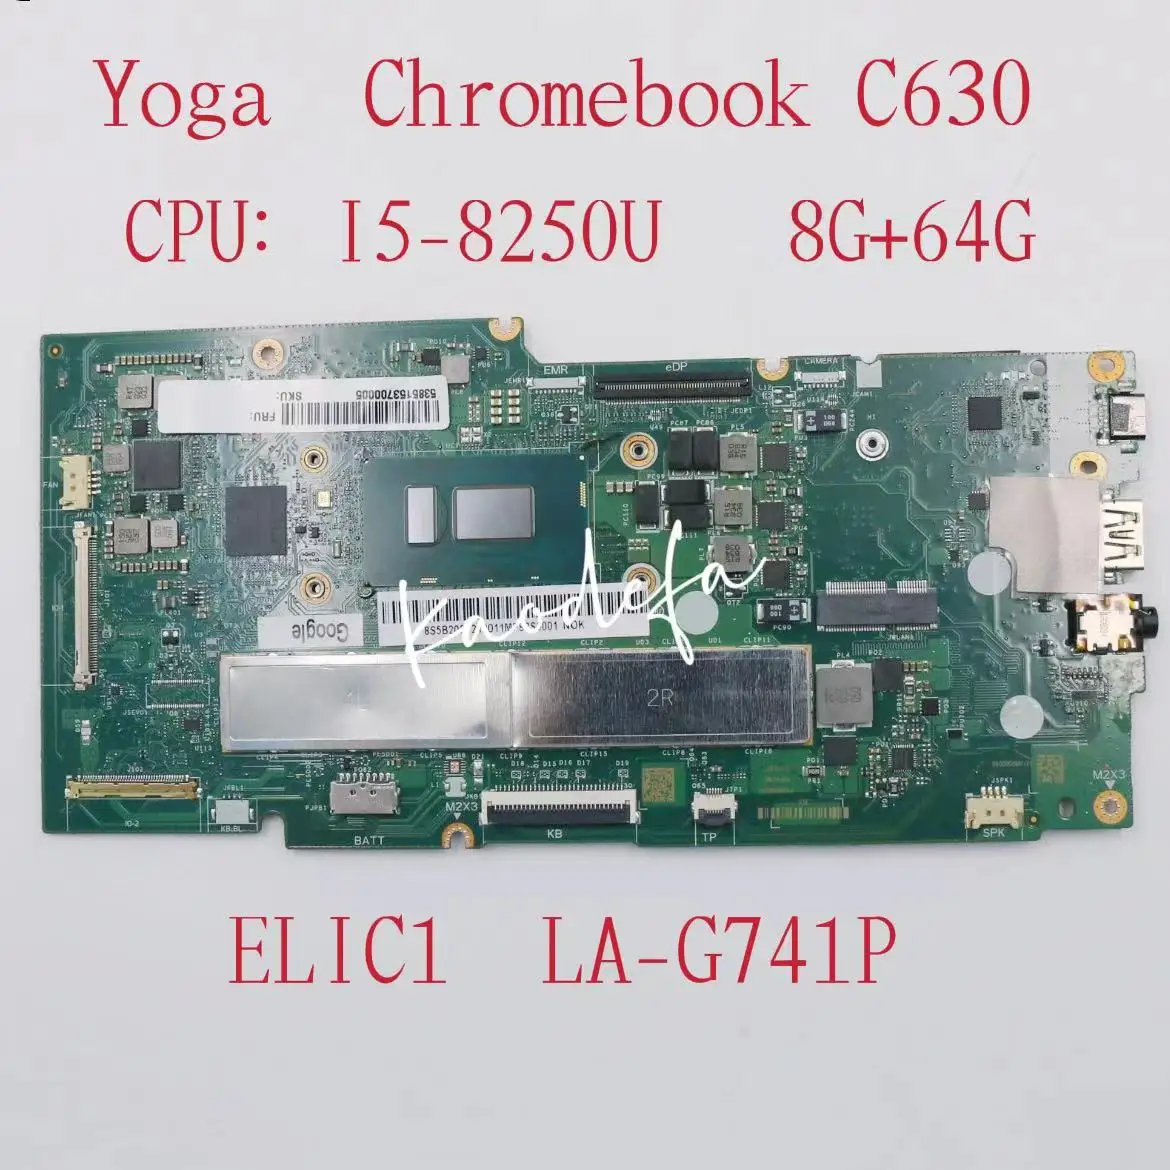 ELIC1 LA-G741P для Lenovo Yoga Chromebook C630 Материнская плата ноутбука 81T9 Процессор: I5-8250U SR3W0 Оперативная память: 8G + 64G FRU: 5B20S72120 Тест В порядке - 0